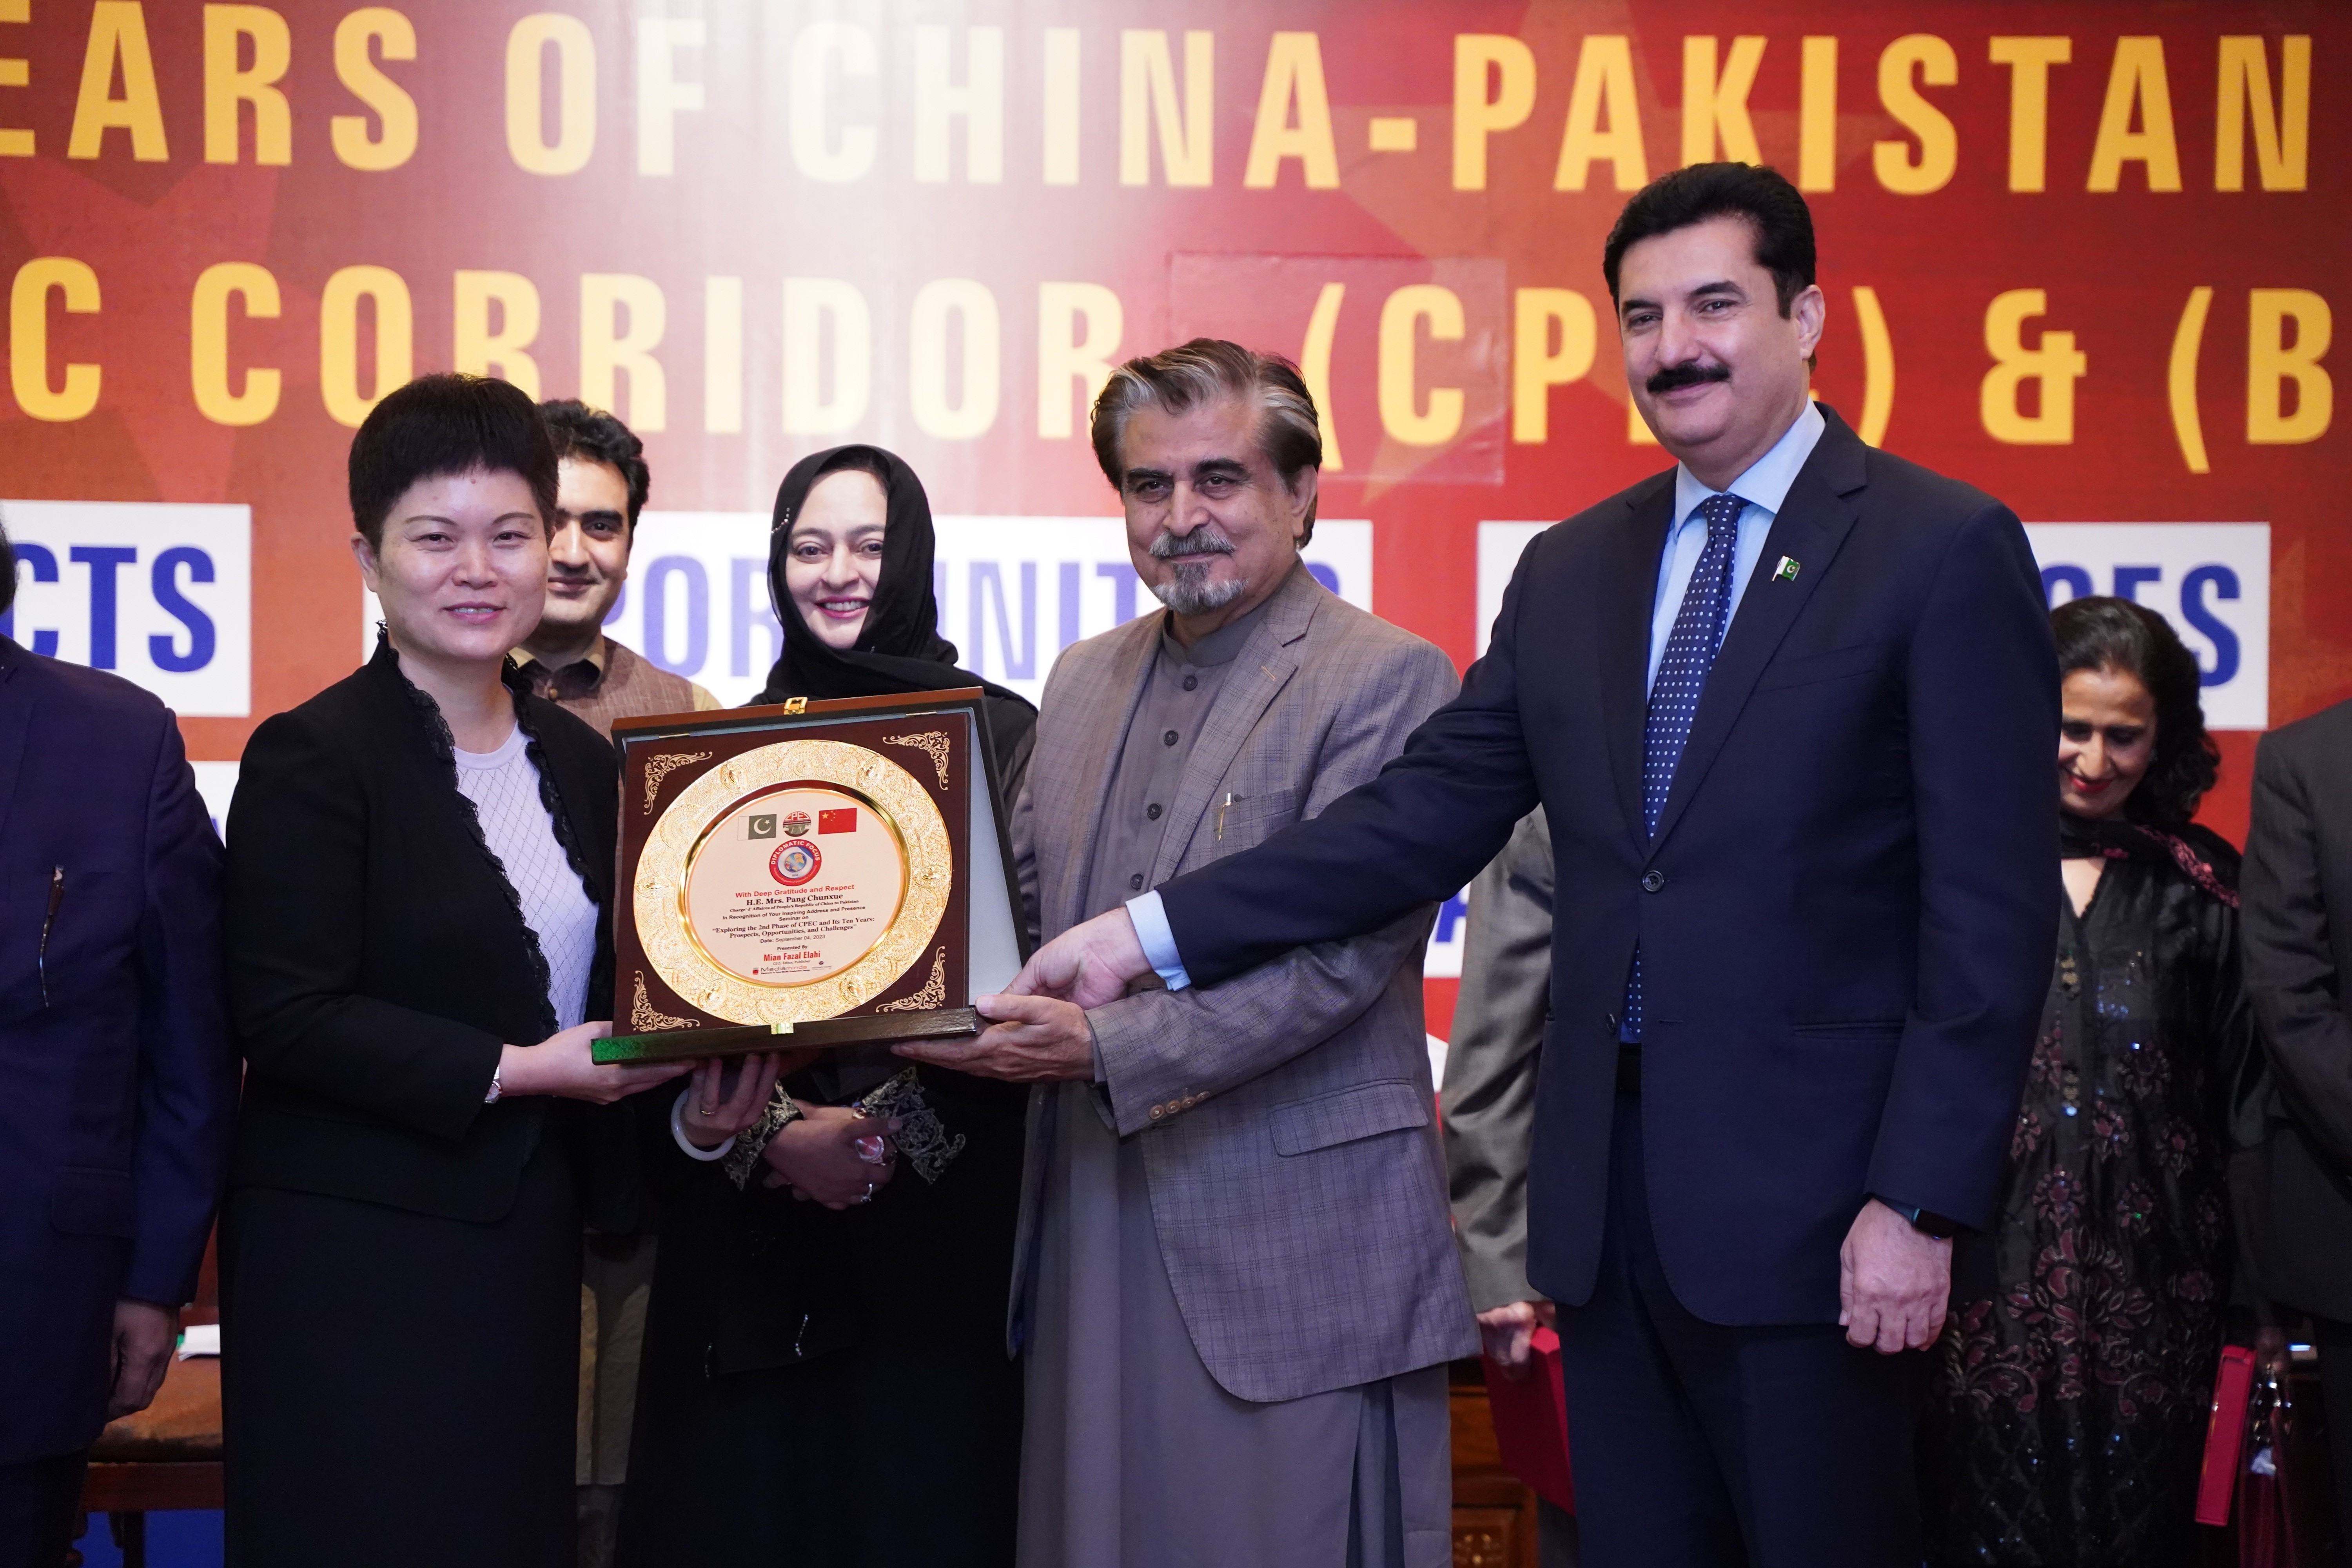 Jamal Shah: Federal Minister of National Heritage and Culture of Pakistan and Faisal Kundi presenting award to Ms. Pang Chun Fu